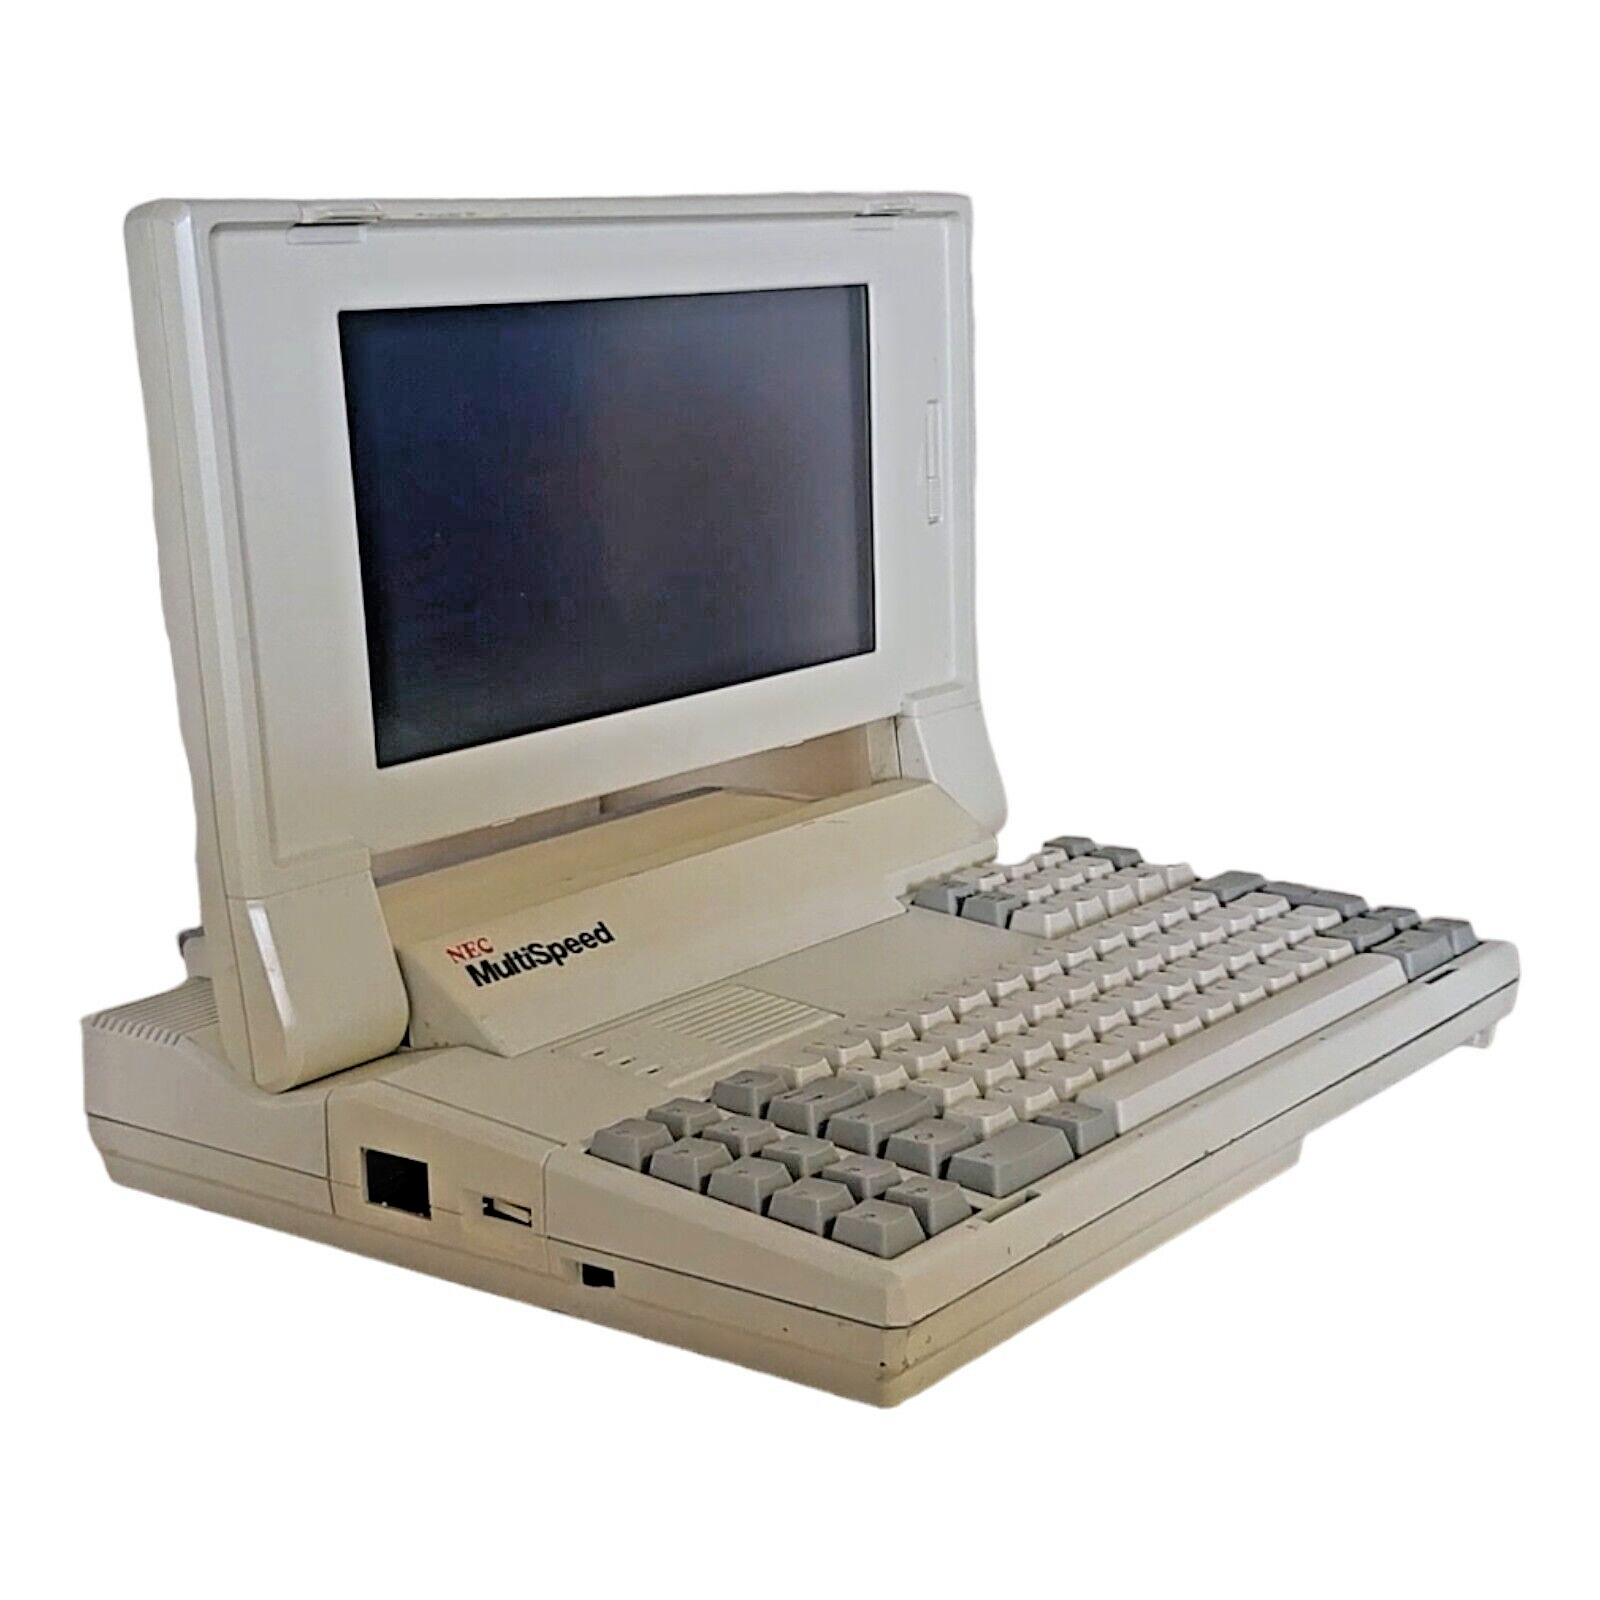 Rare Vintage NEC MultiSpeed Microcomputer Retro Laptop PC - UNTESTED